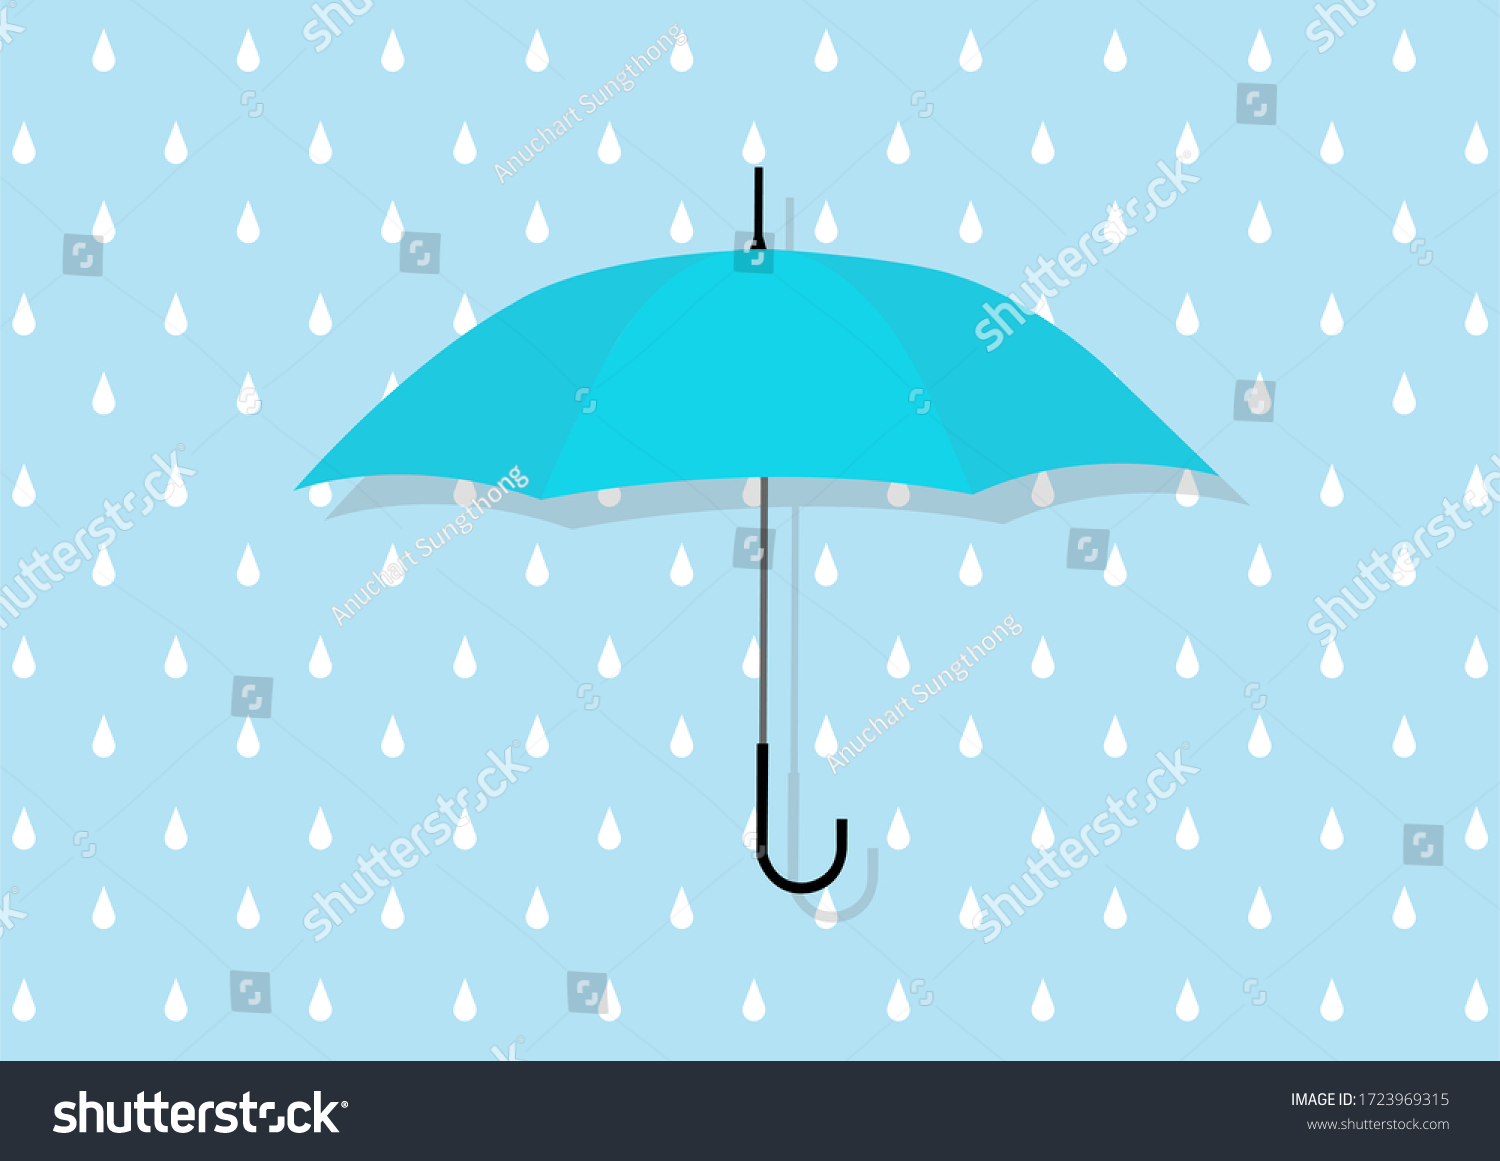 Umbrella Rain Drops Pattern Background Stock Illustration 1723969315 ...